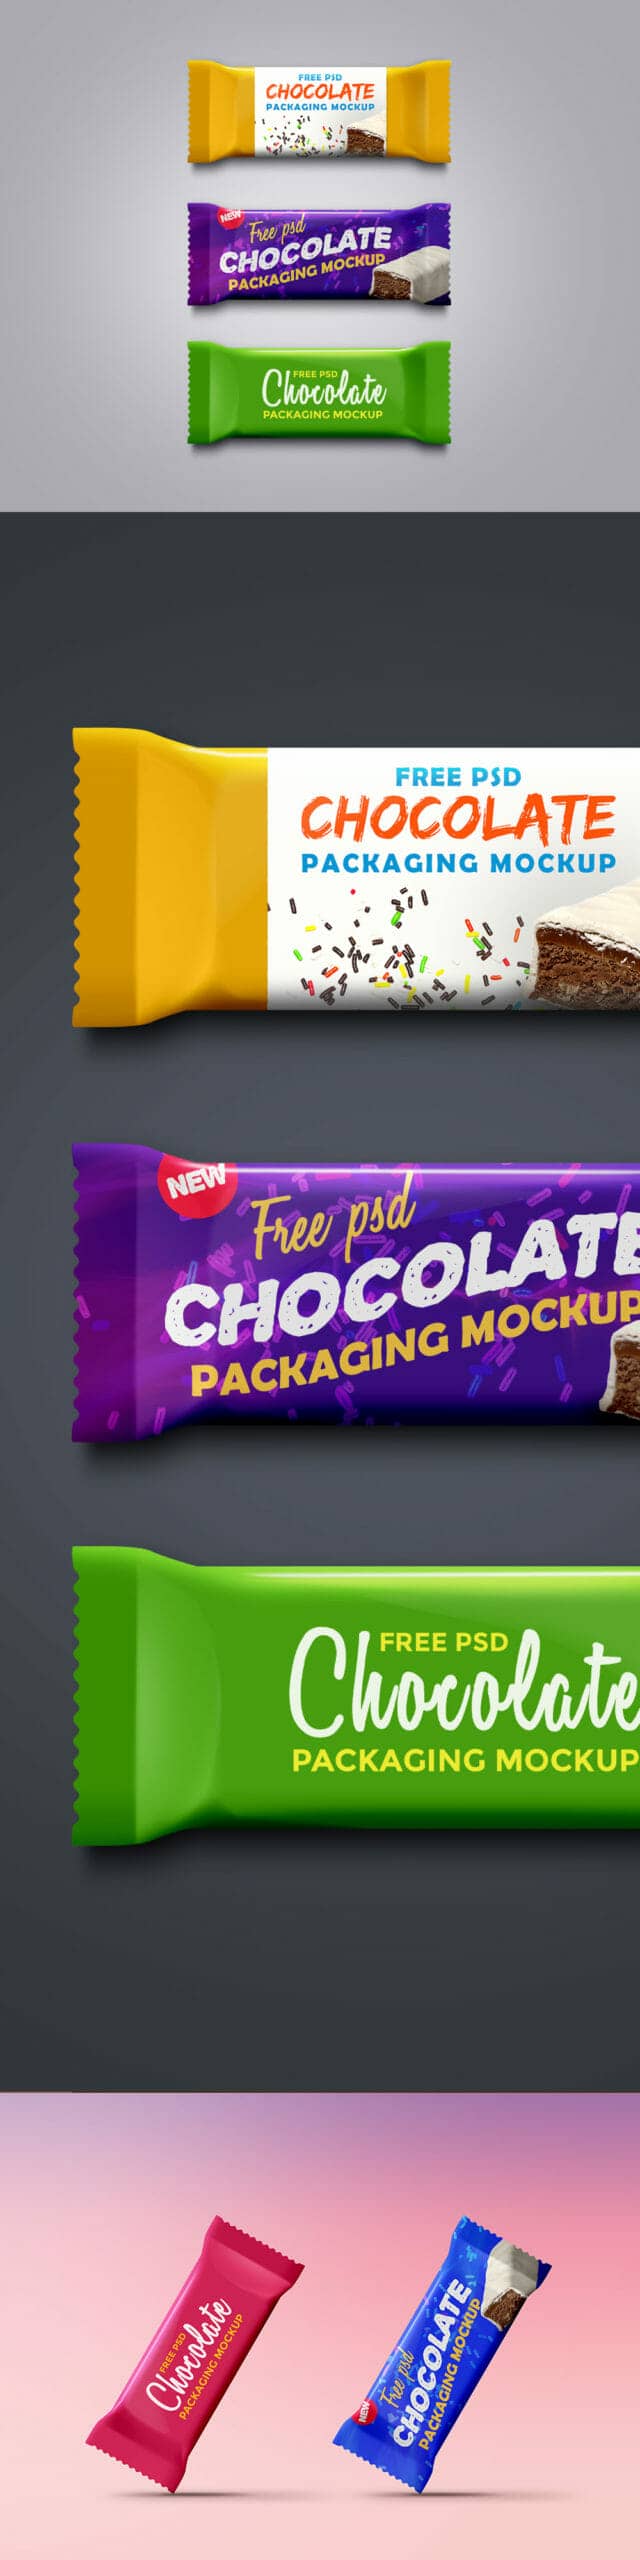 New Chocolate Packaging Mockup